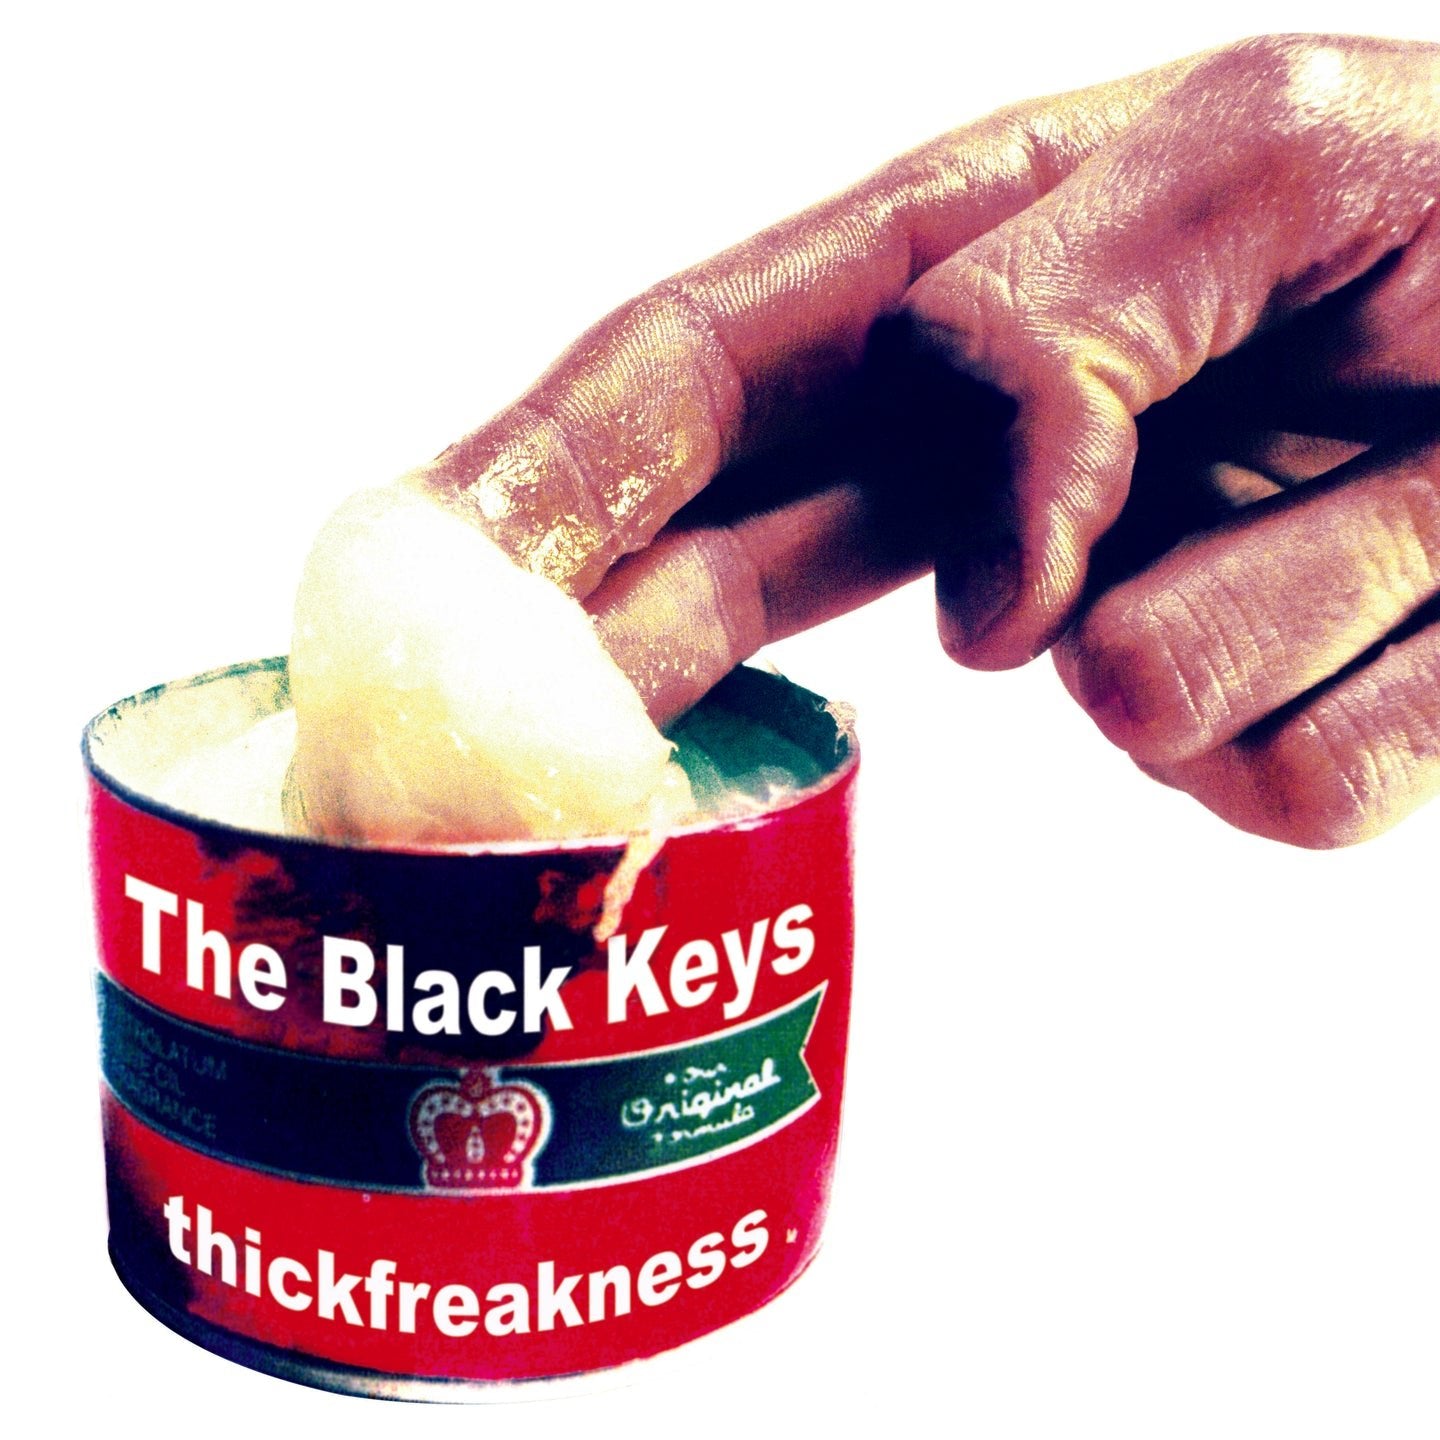 Black Keys "Thickfreakness" 20th Anniversary